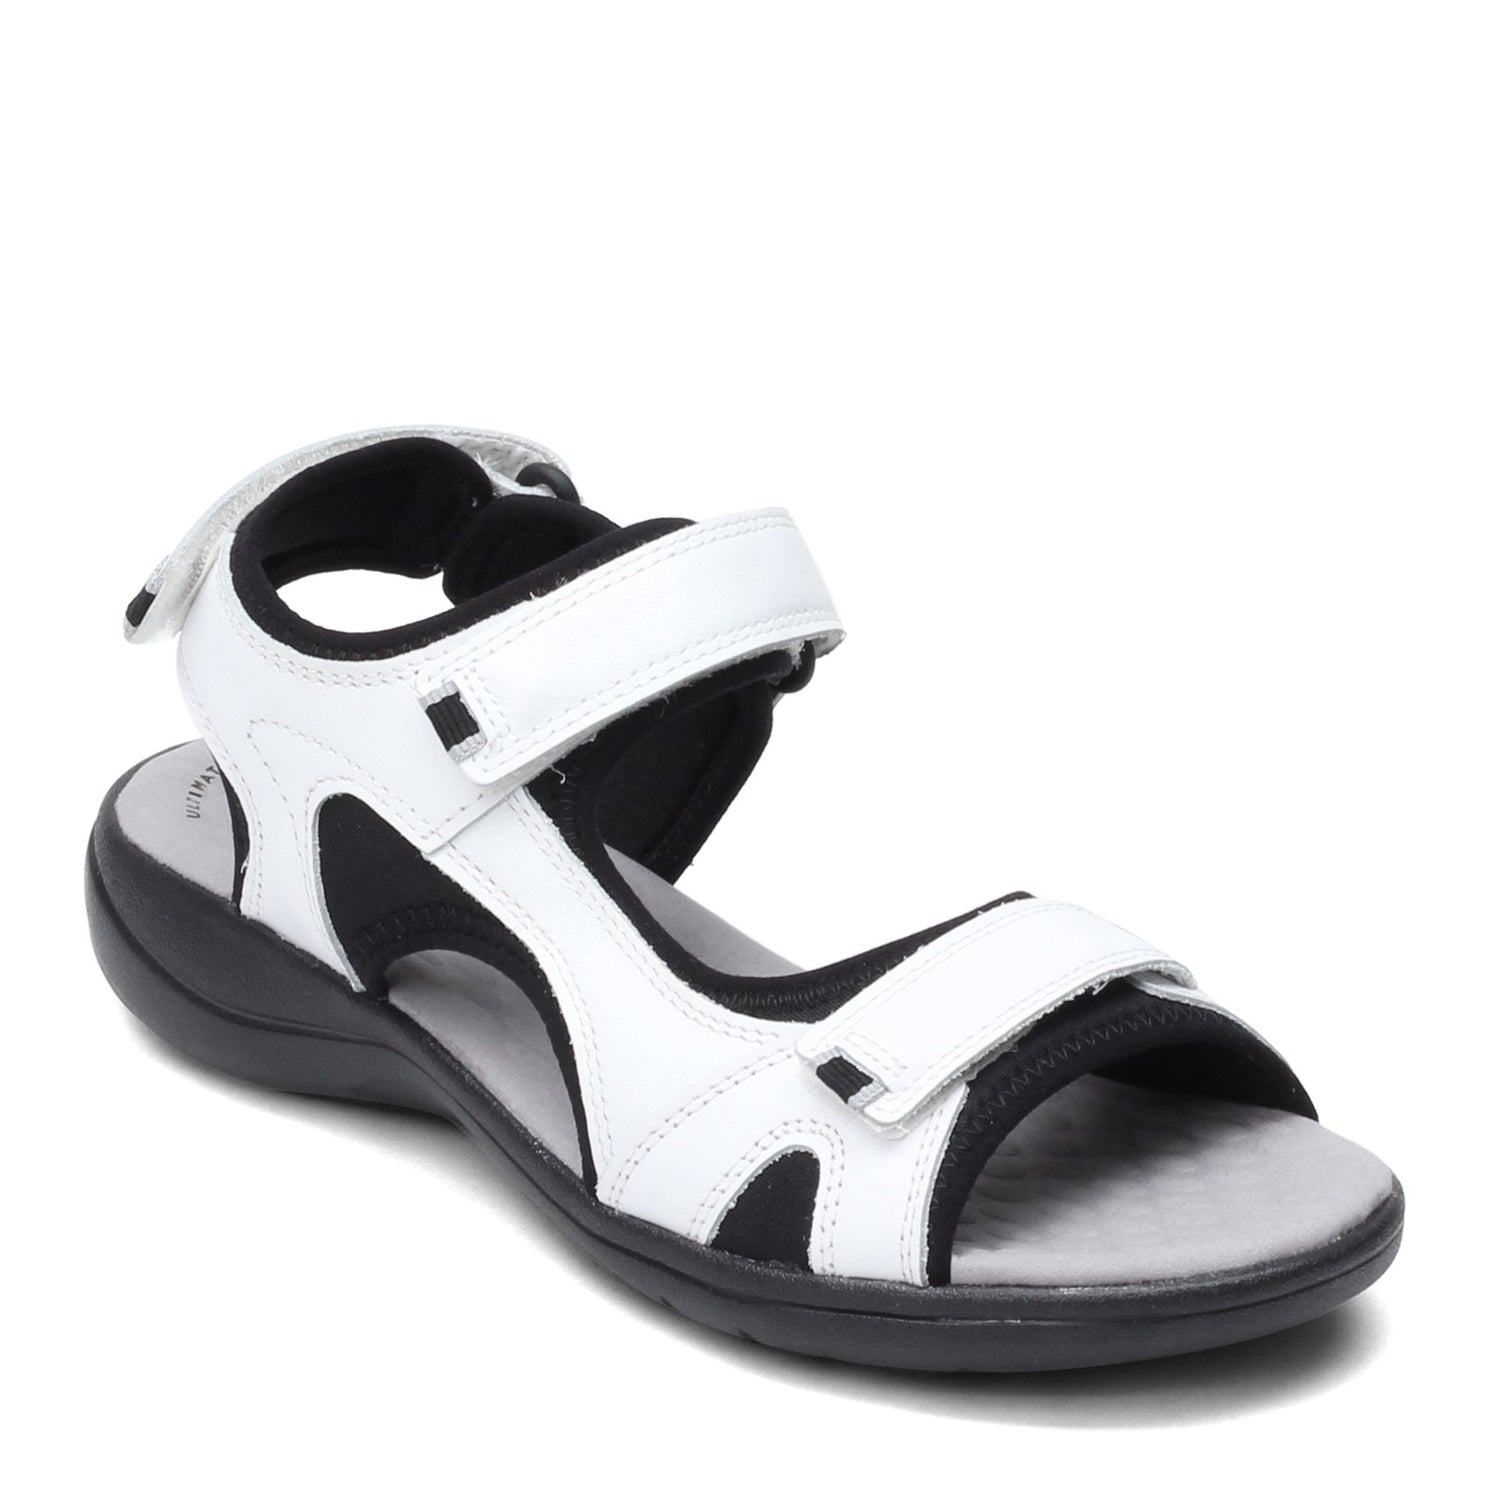 Peltz Shoes  Women's Clarks Saylie Spin Sandal WHITE 26150179